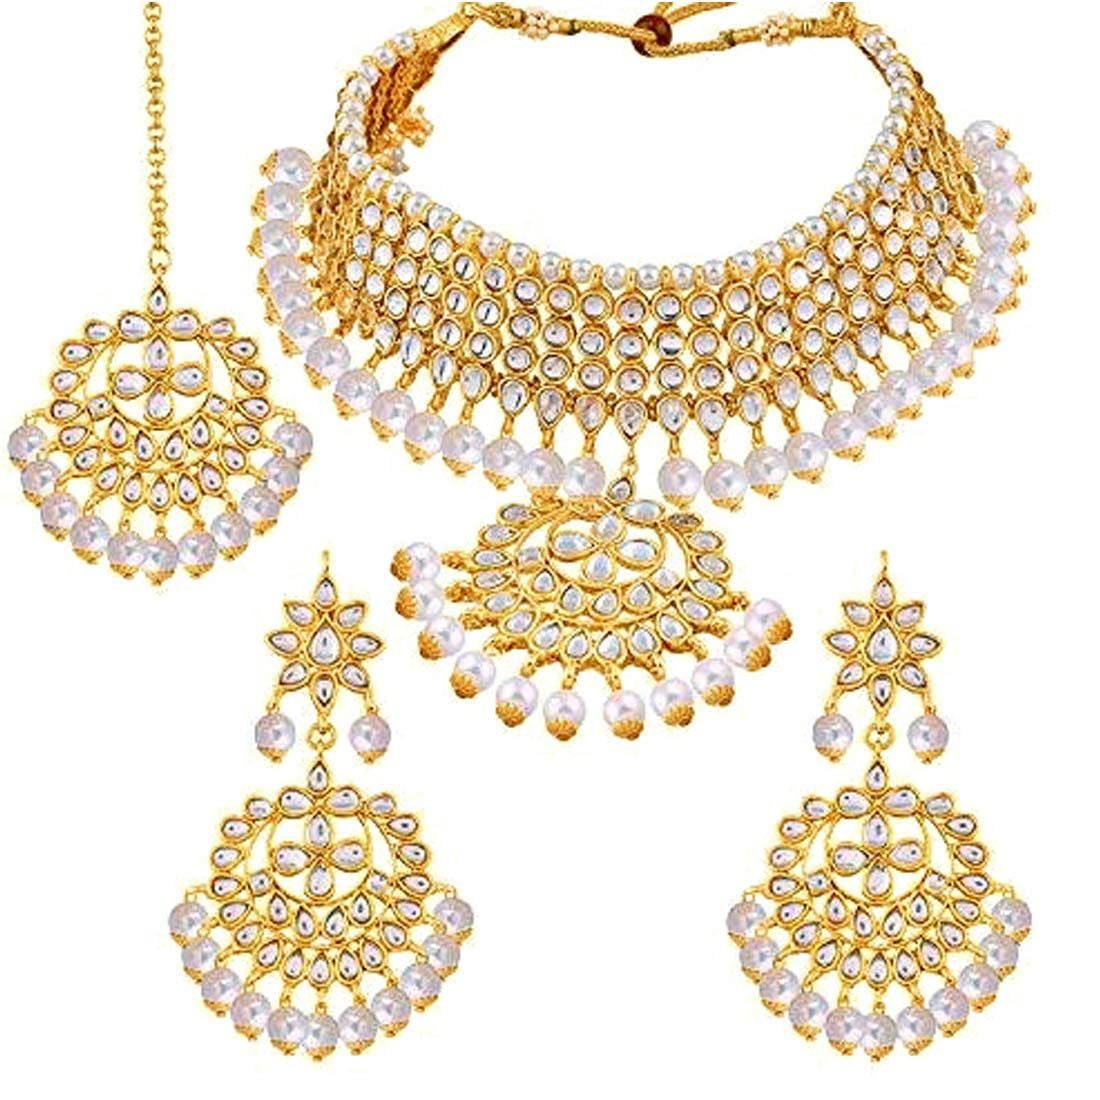 Ethnic Indian Fashion Jewelry Wedding Kundan Necklace Earring Tikka Set Women 